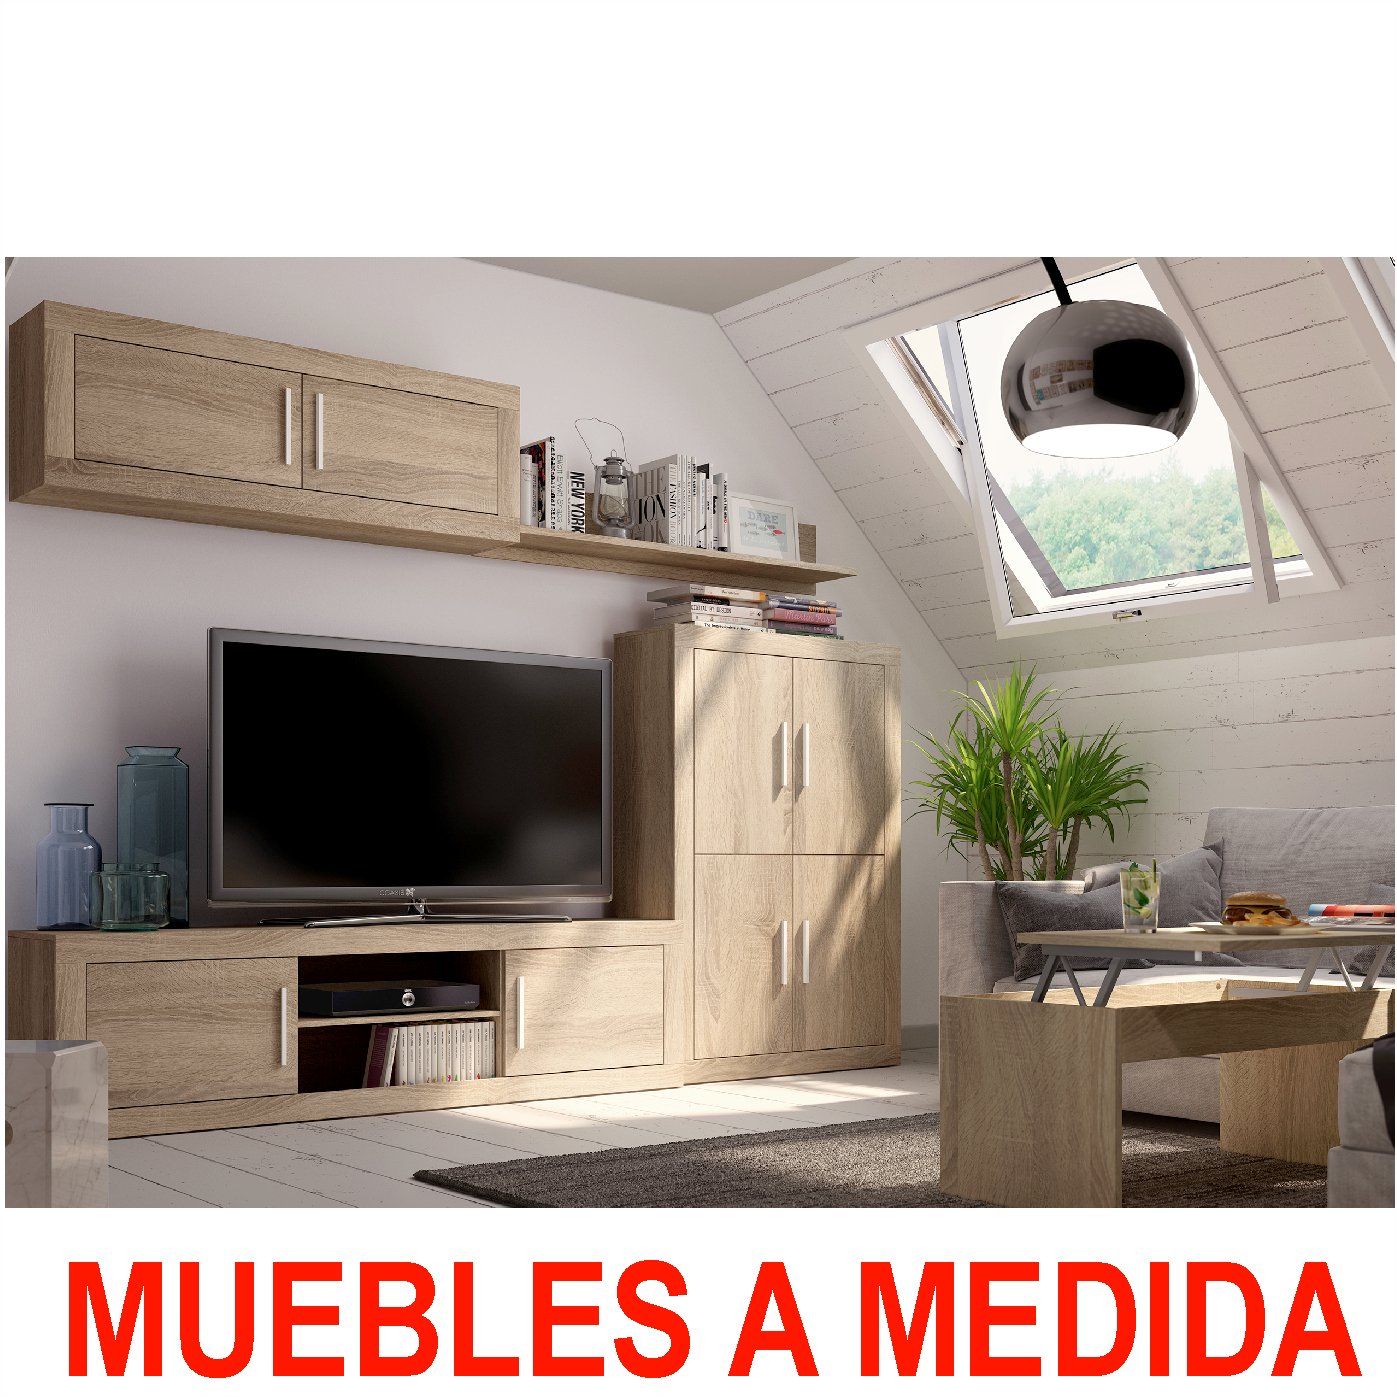 MUEBLES A MEDIDA